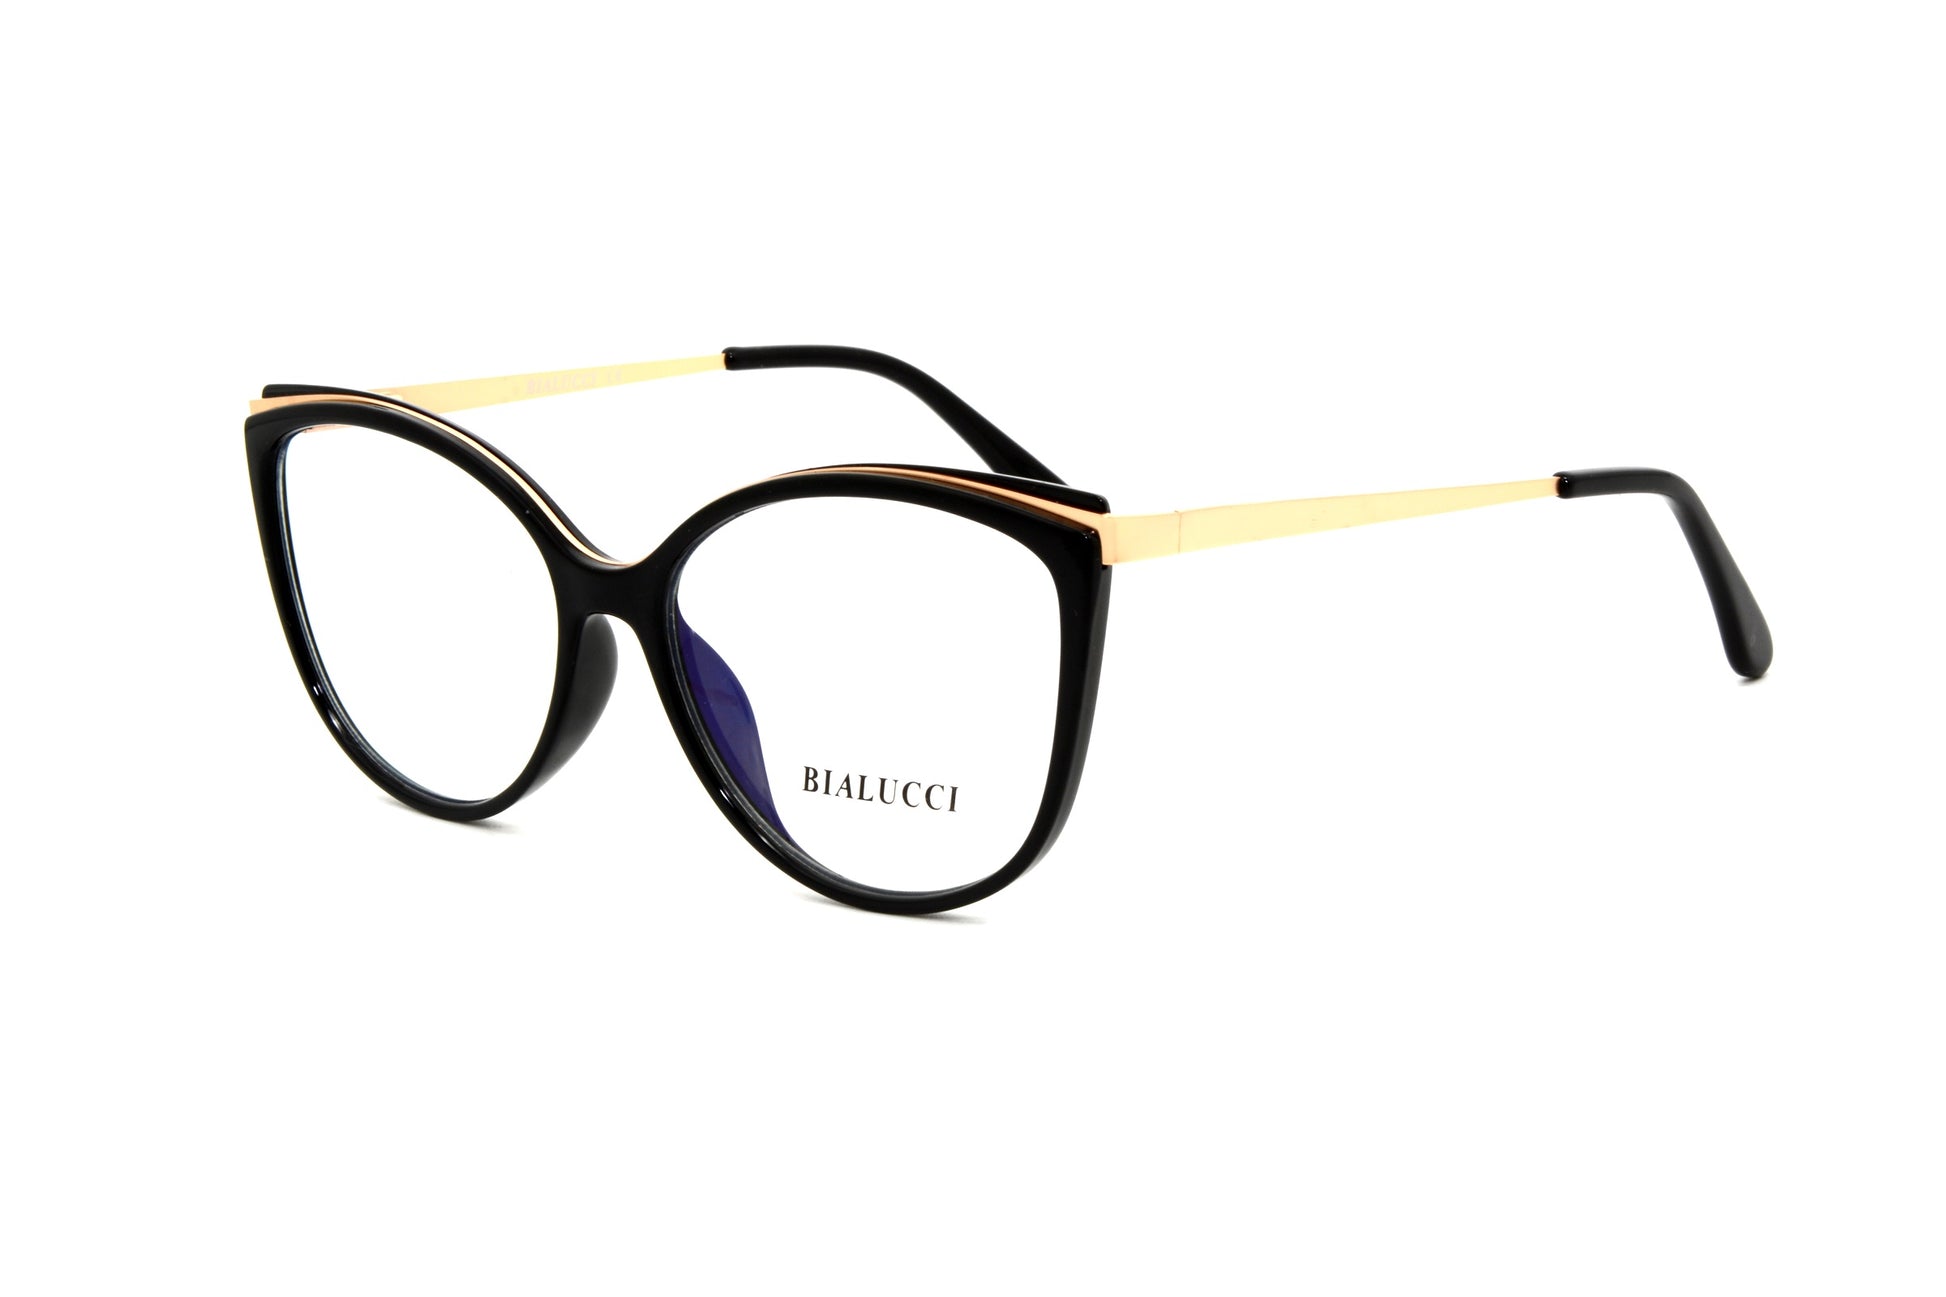 Bialucci eyewear BLC 2052 C1